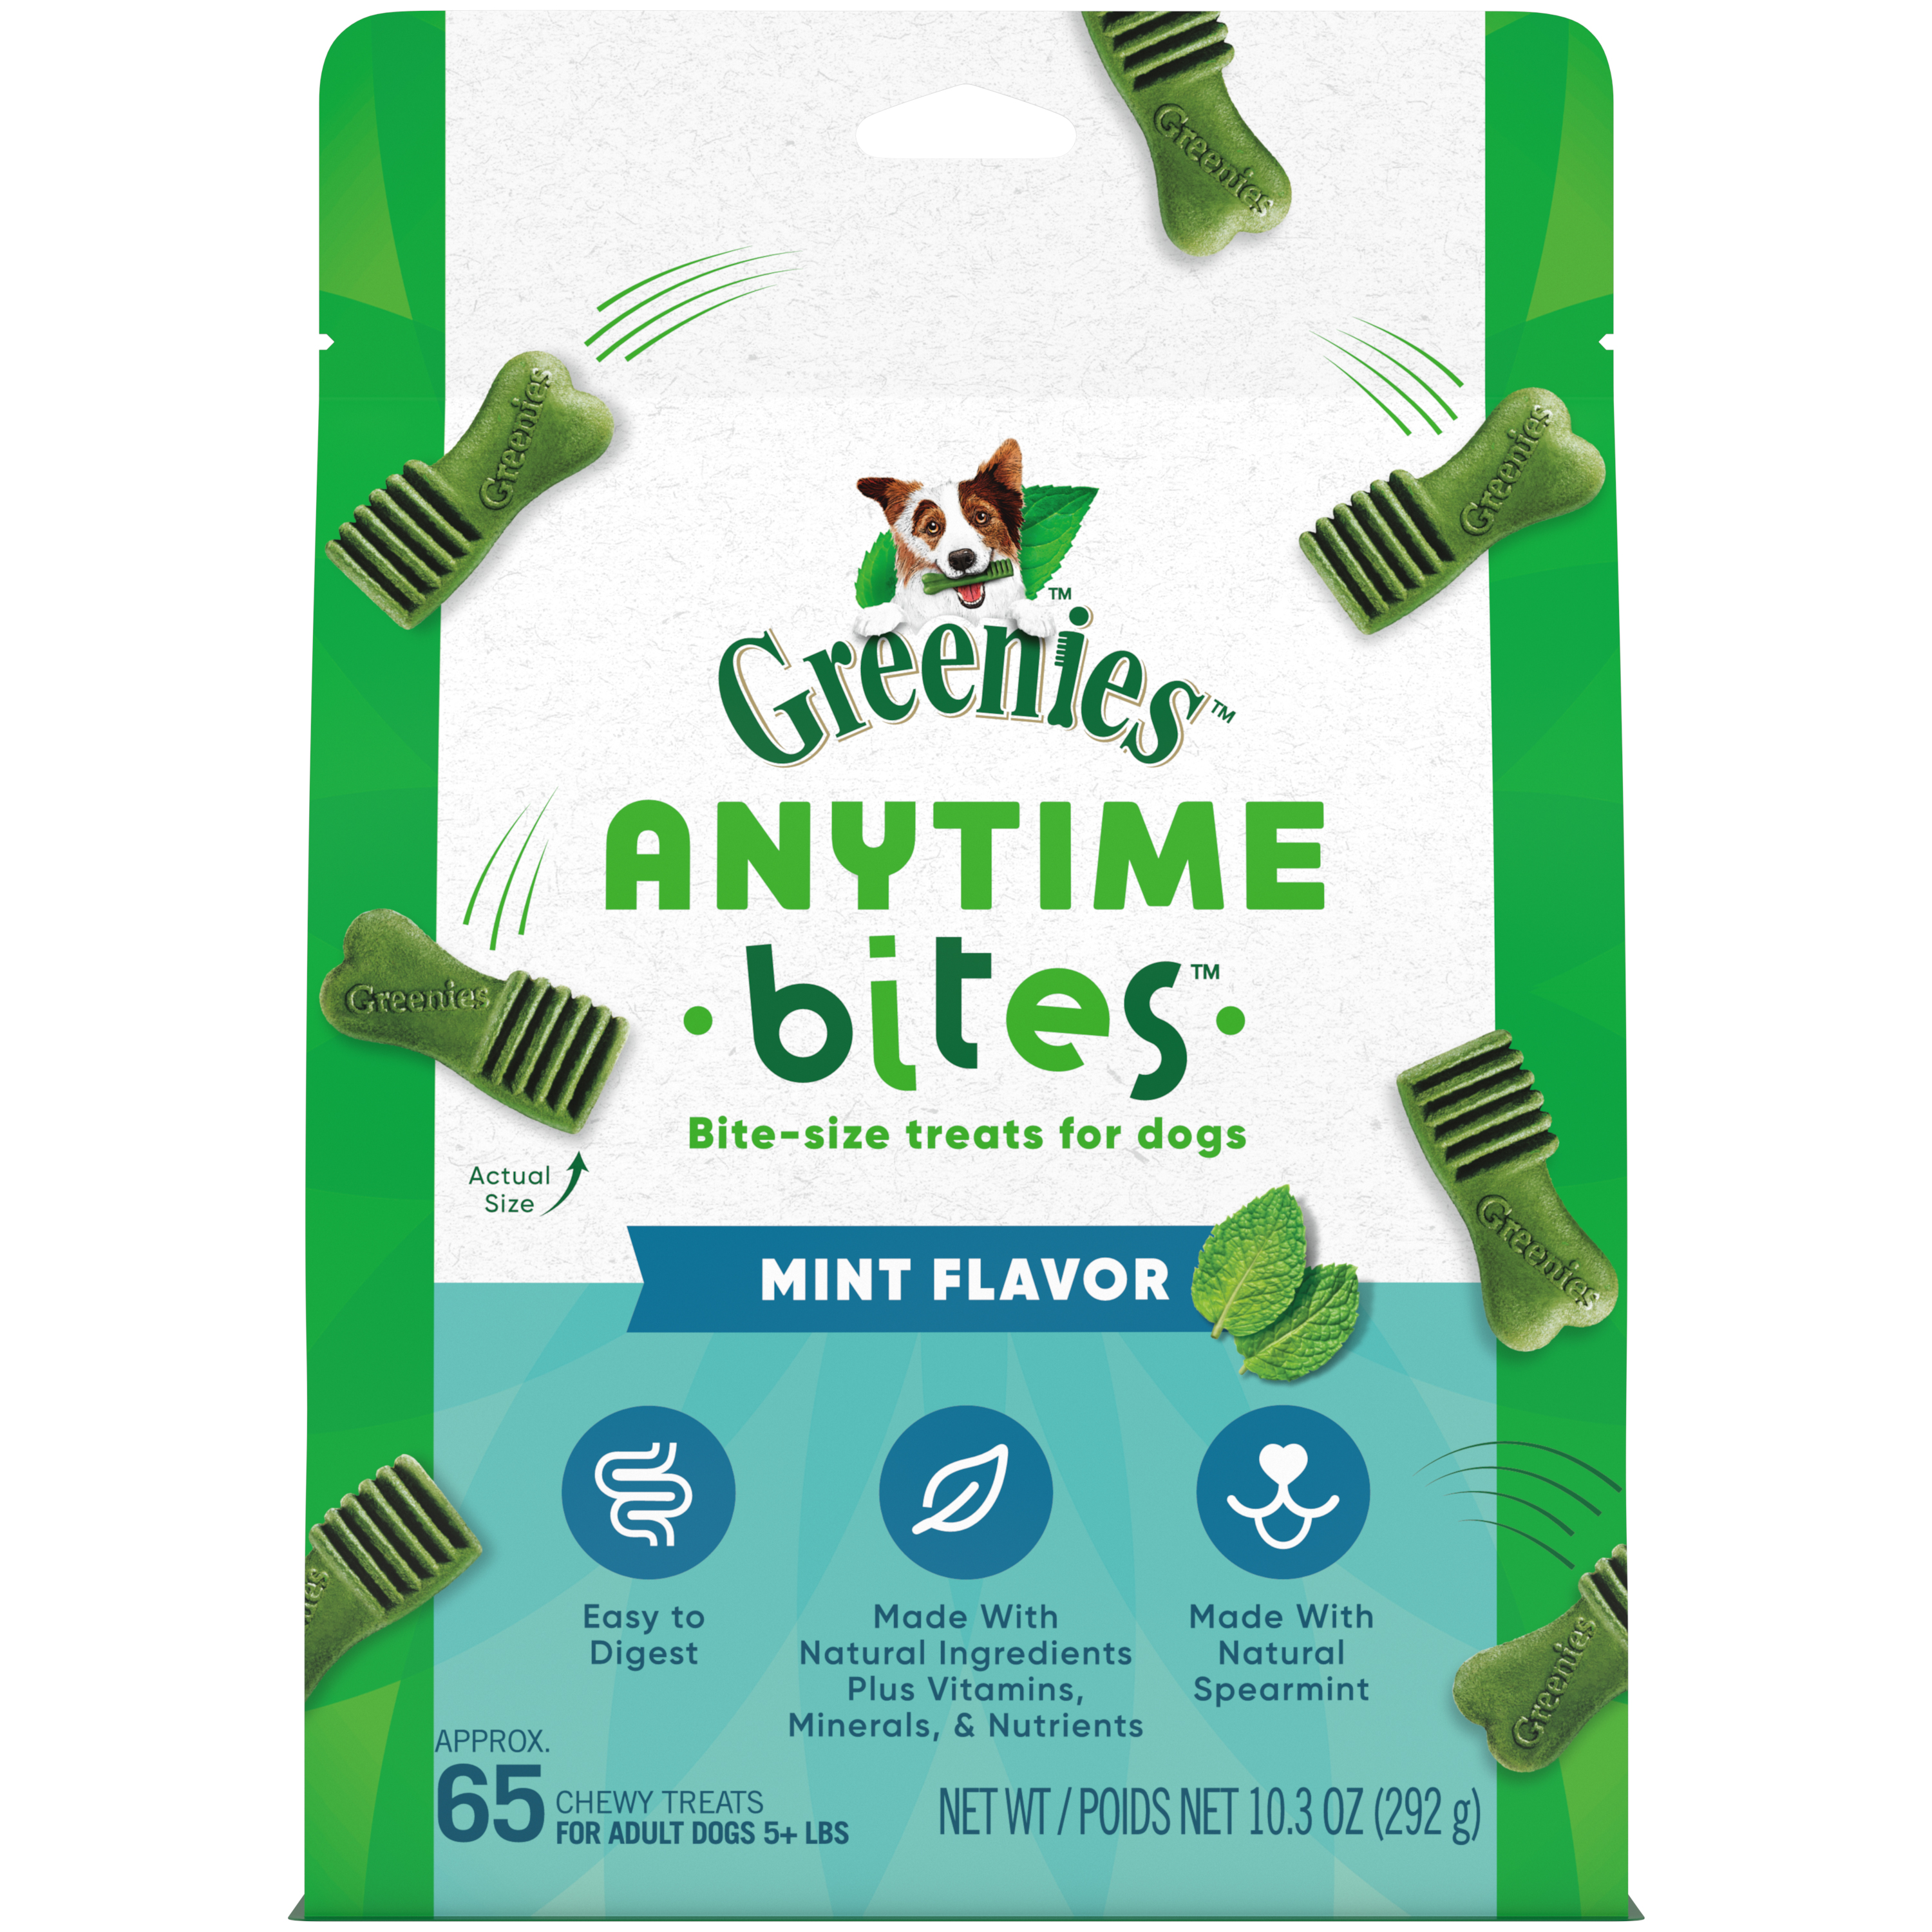 10.34 oz. Greenies Anytime Bites Mint - Treats